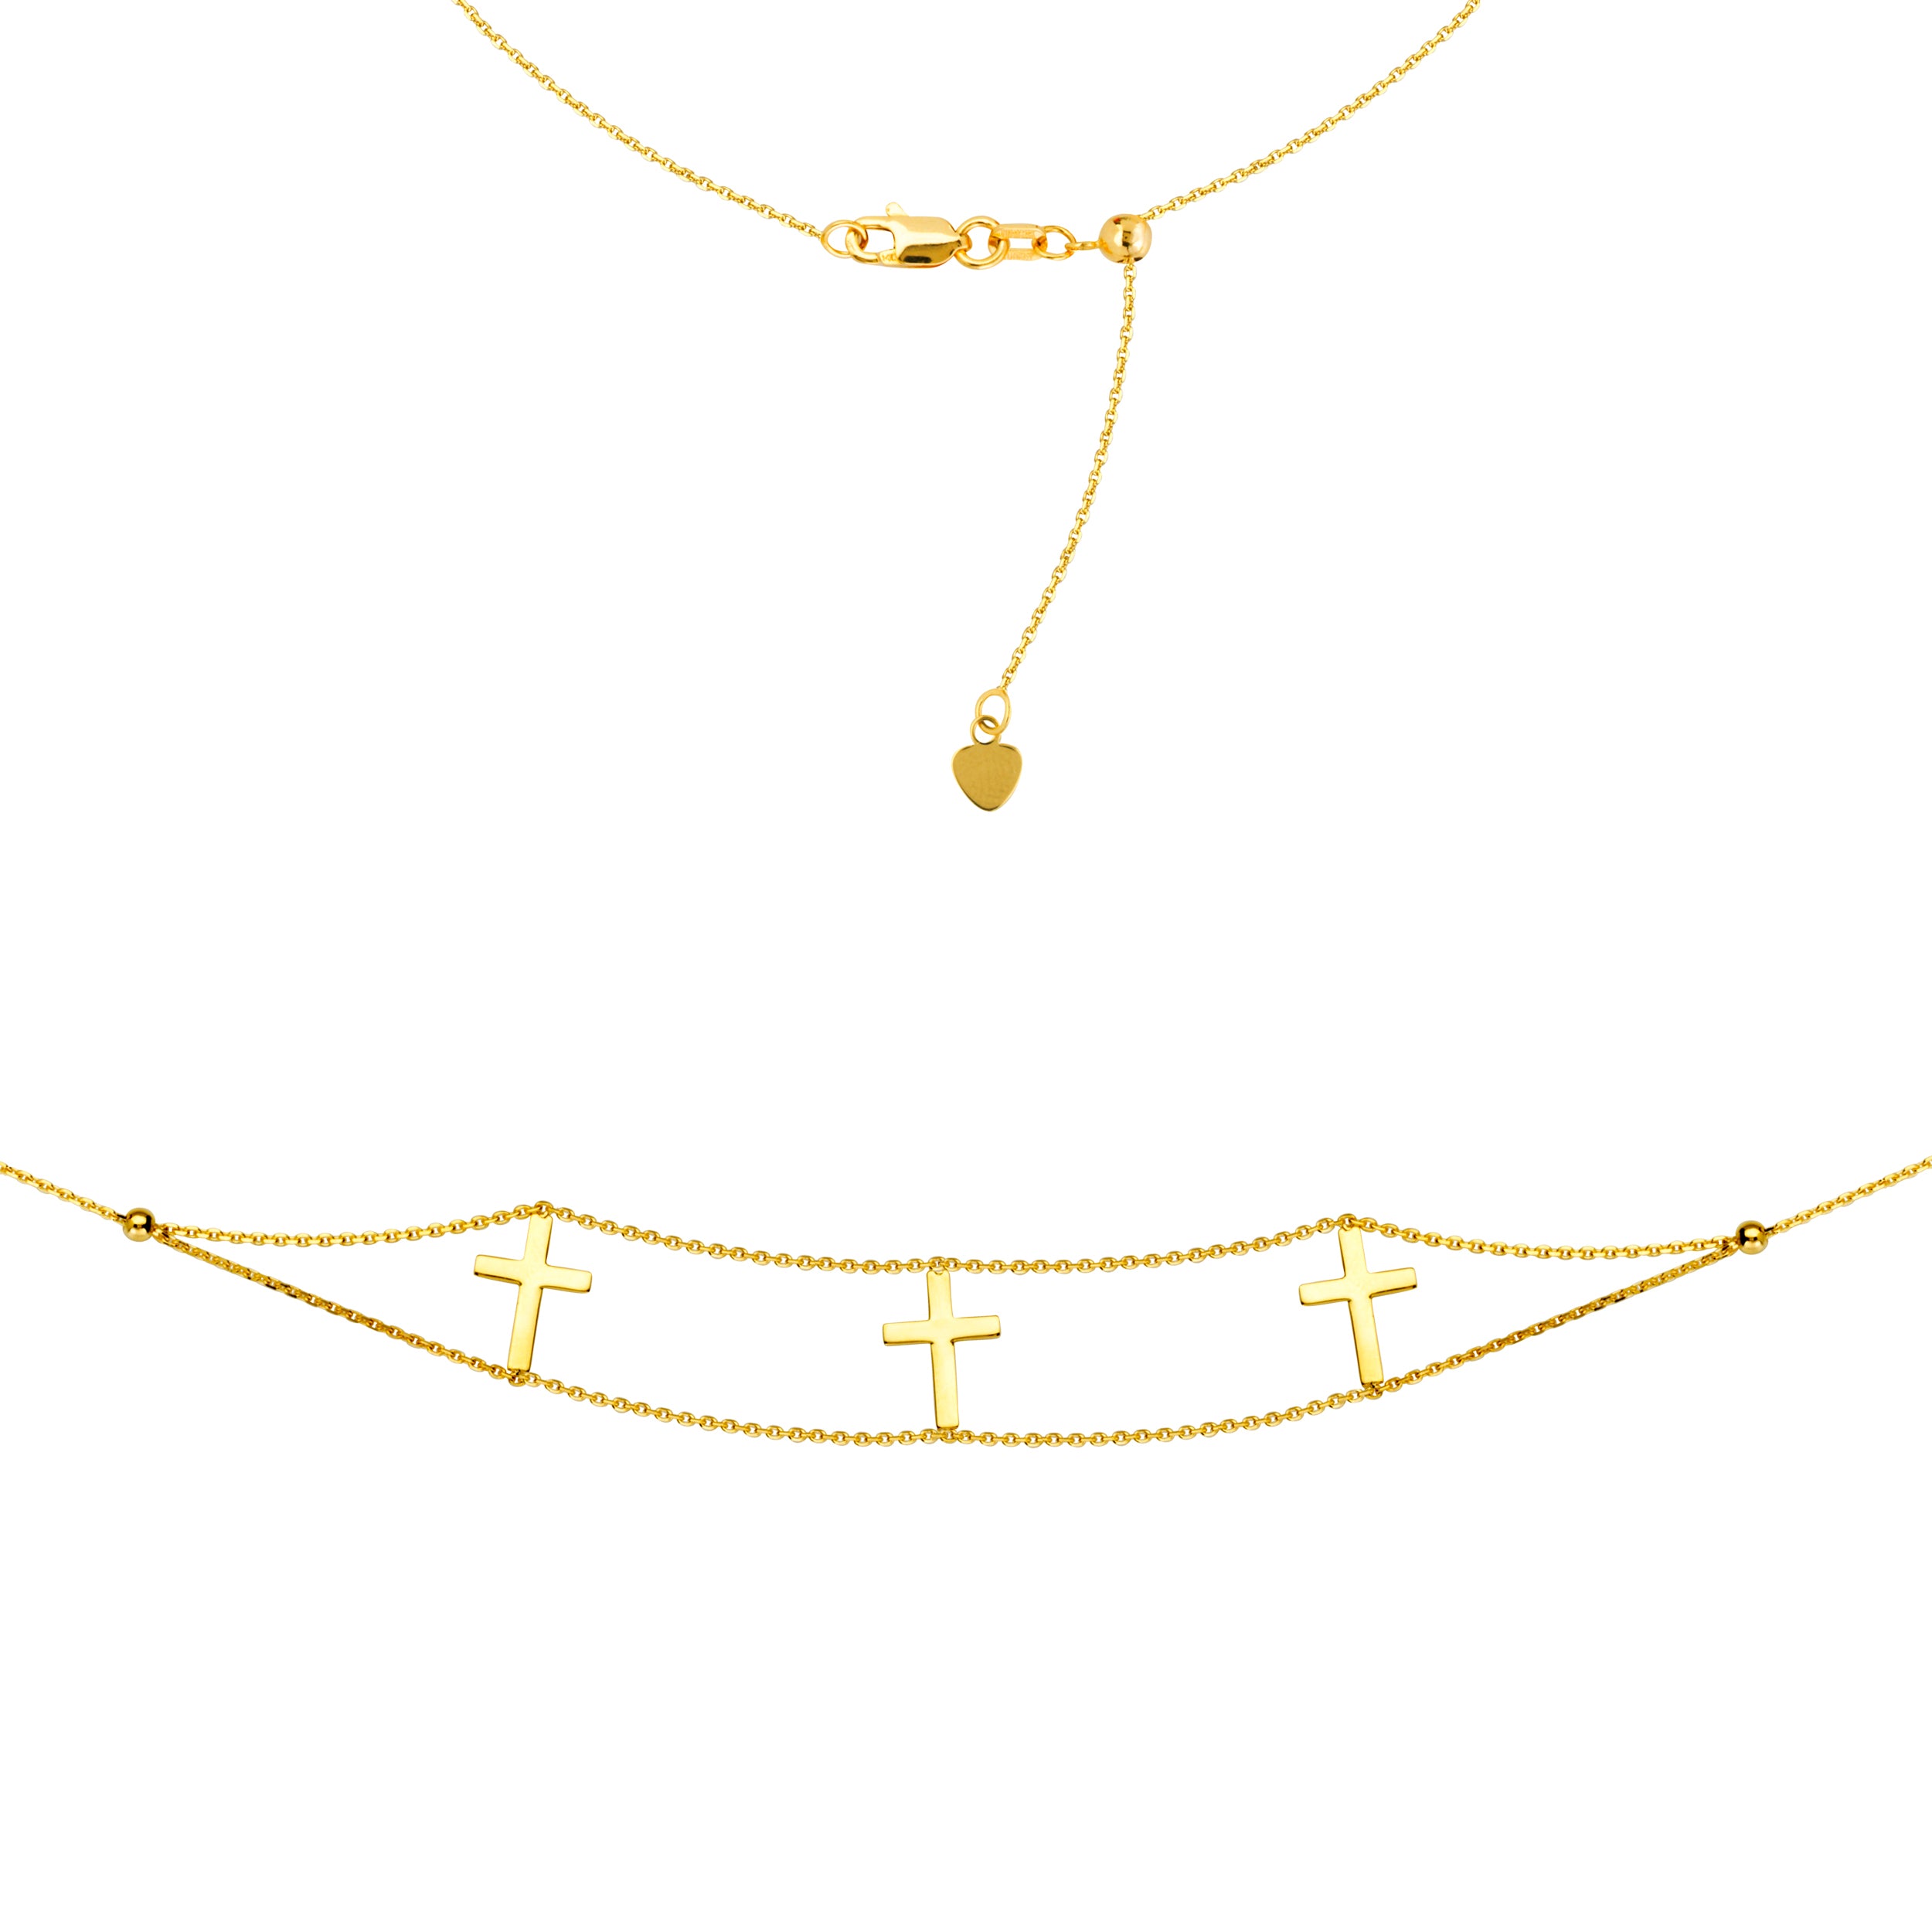 Triple Cross Choker 14k Yellow Gold Necklace, 16" Adjustable